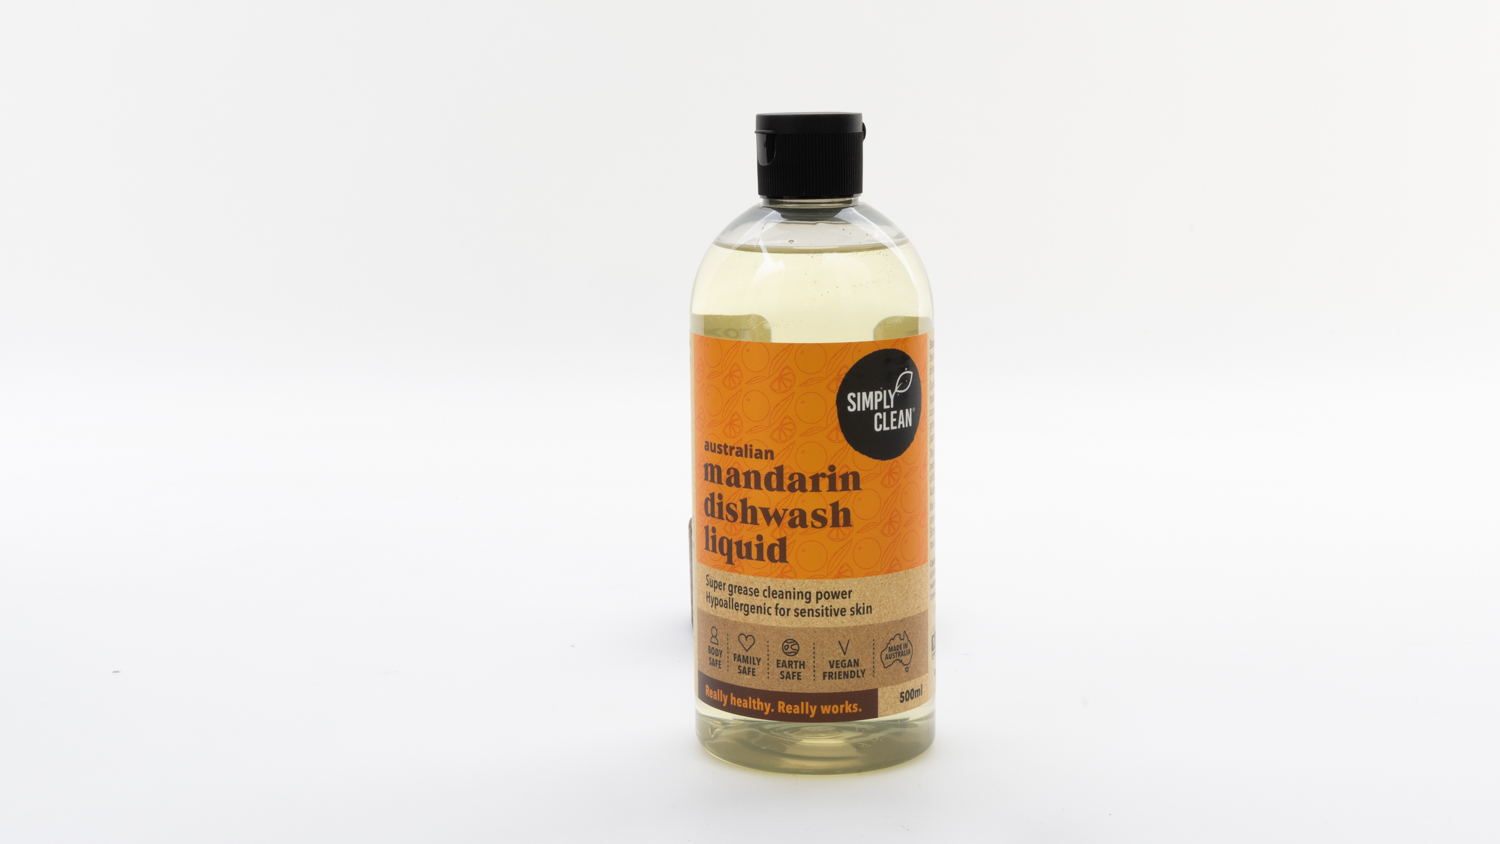 Simply Clean Australian Mandarin Dishwash Liquid carousel image